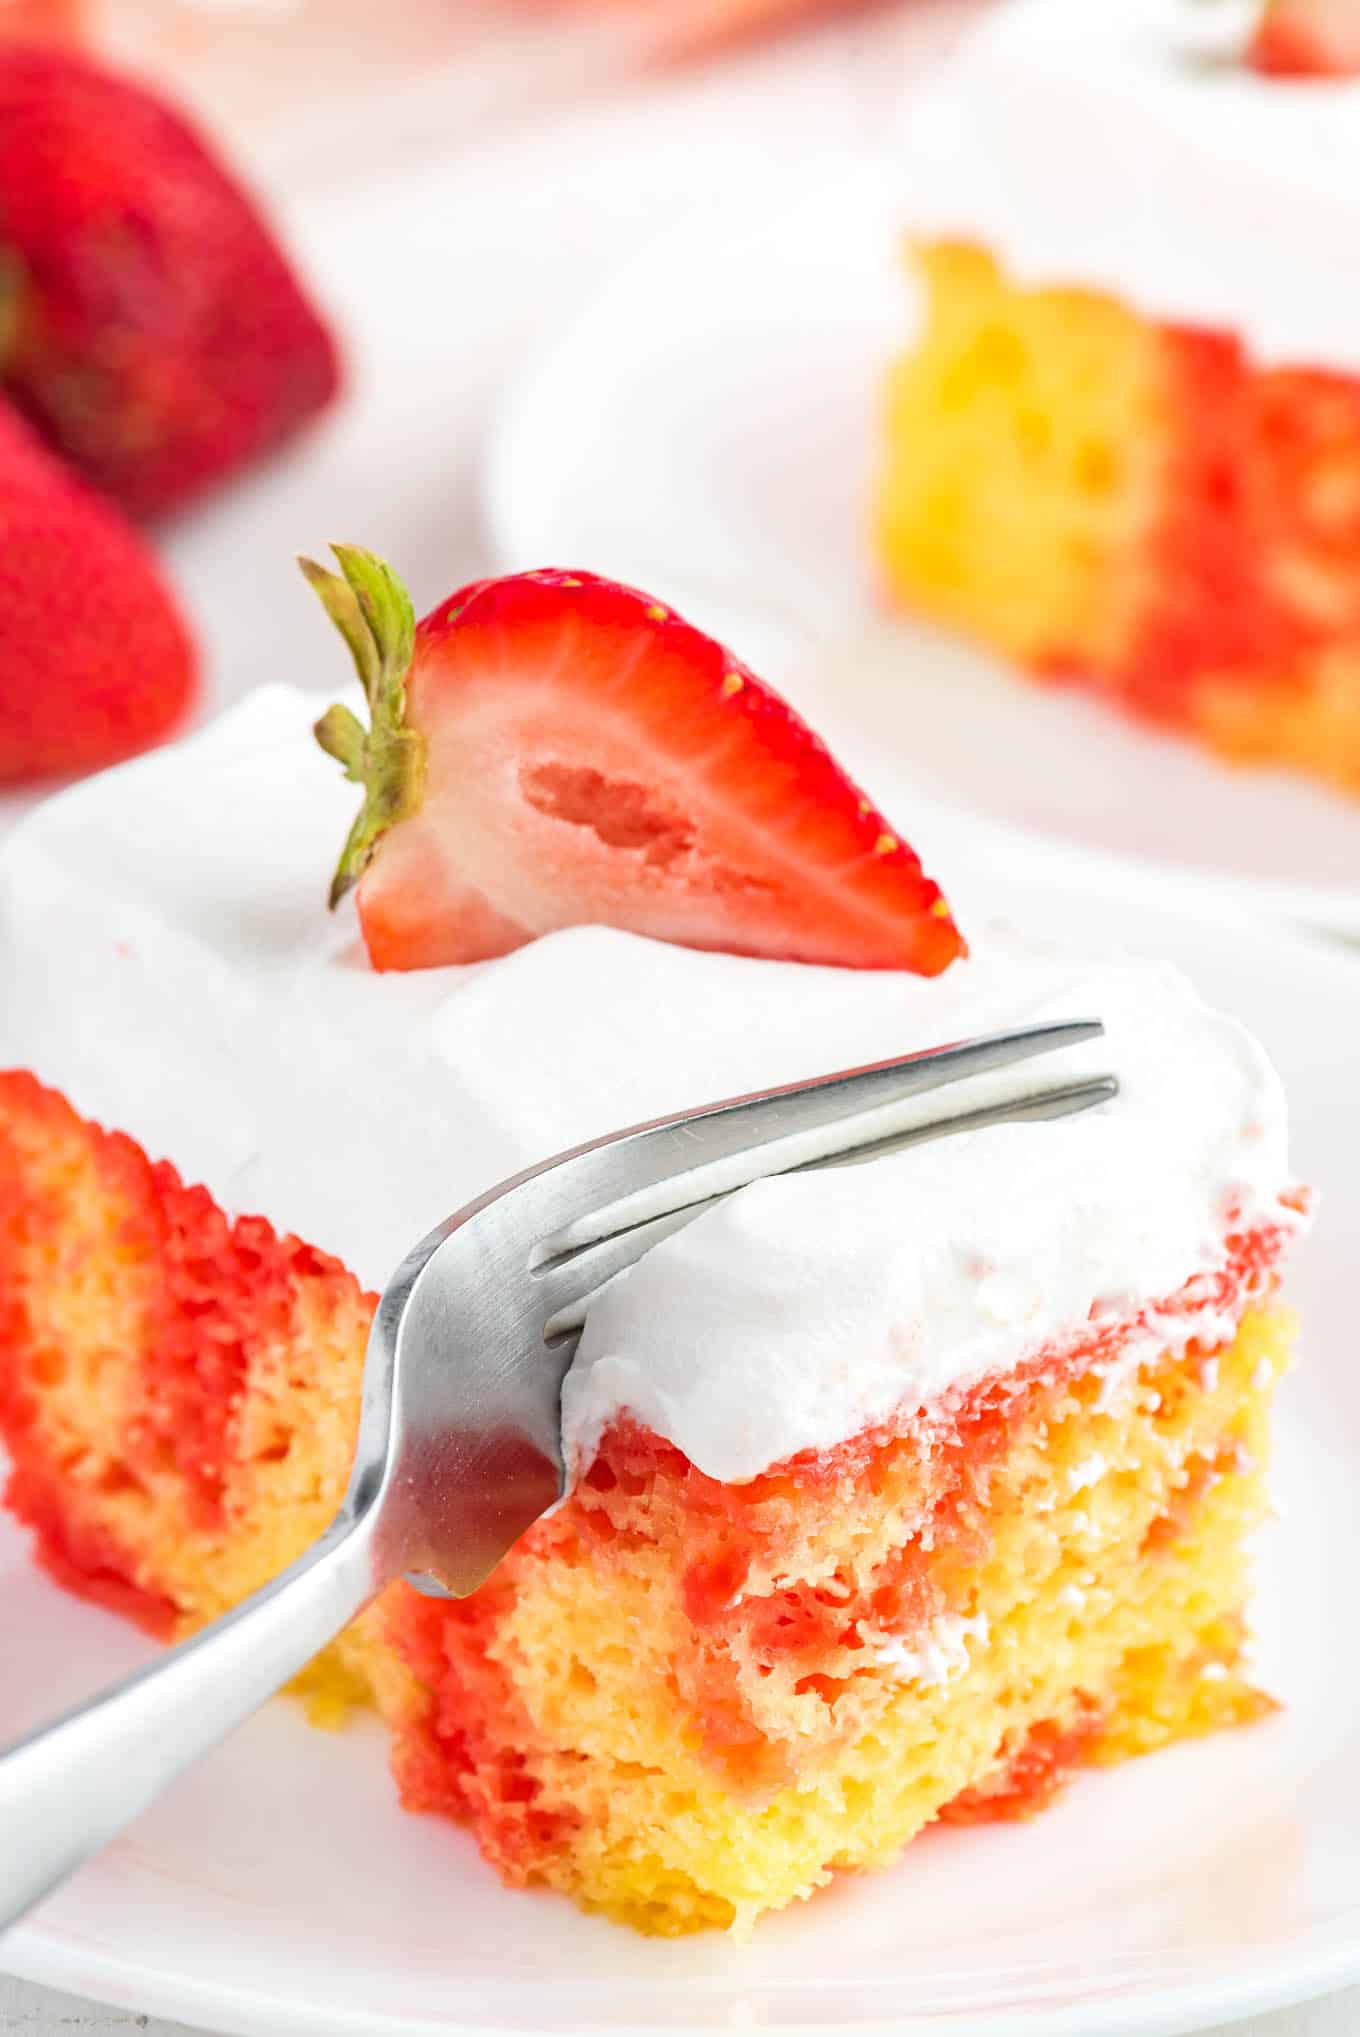 A fork cutting into a corner of a piece of strawberry lemonade poke cake.